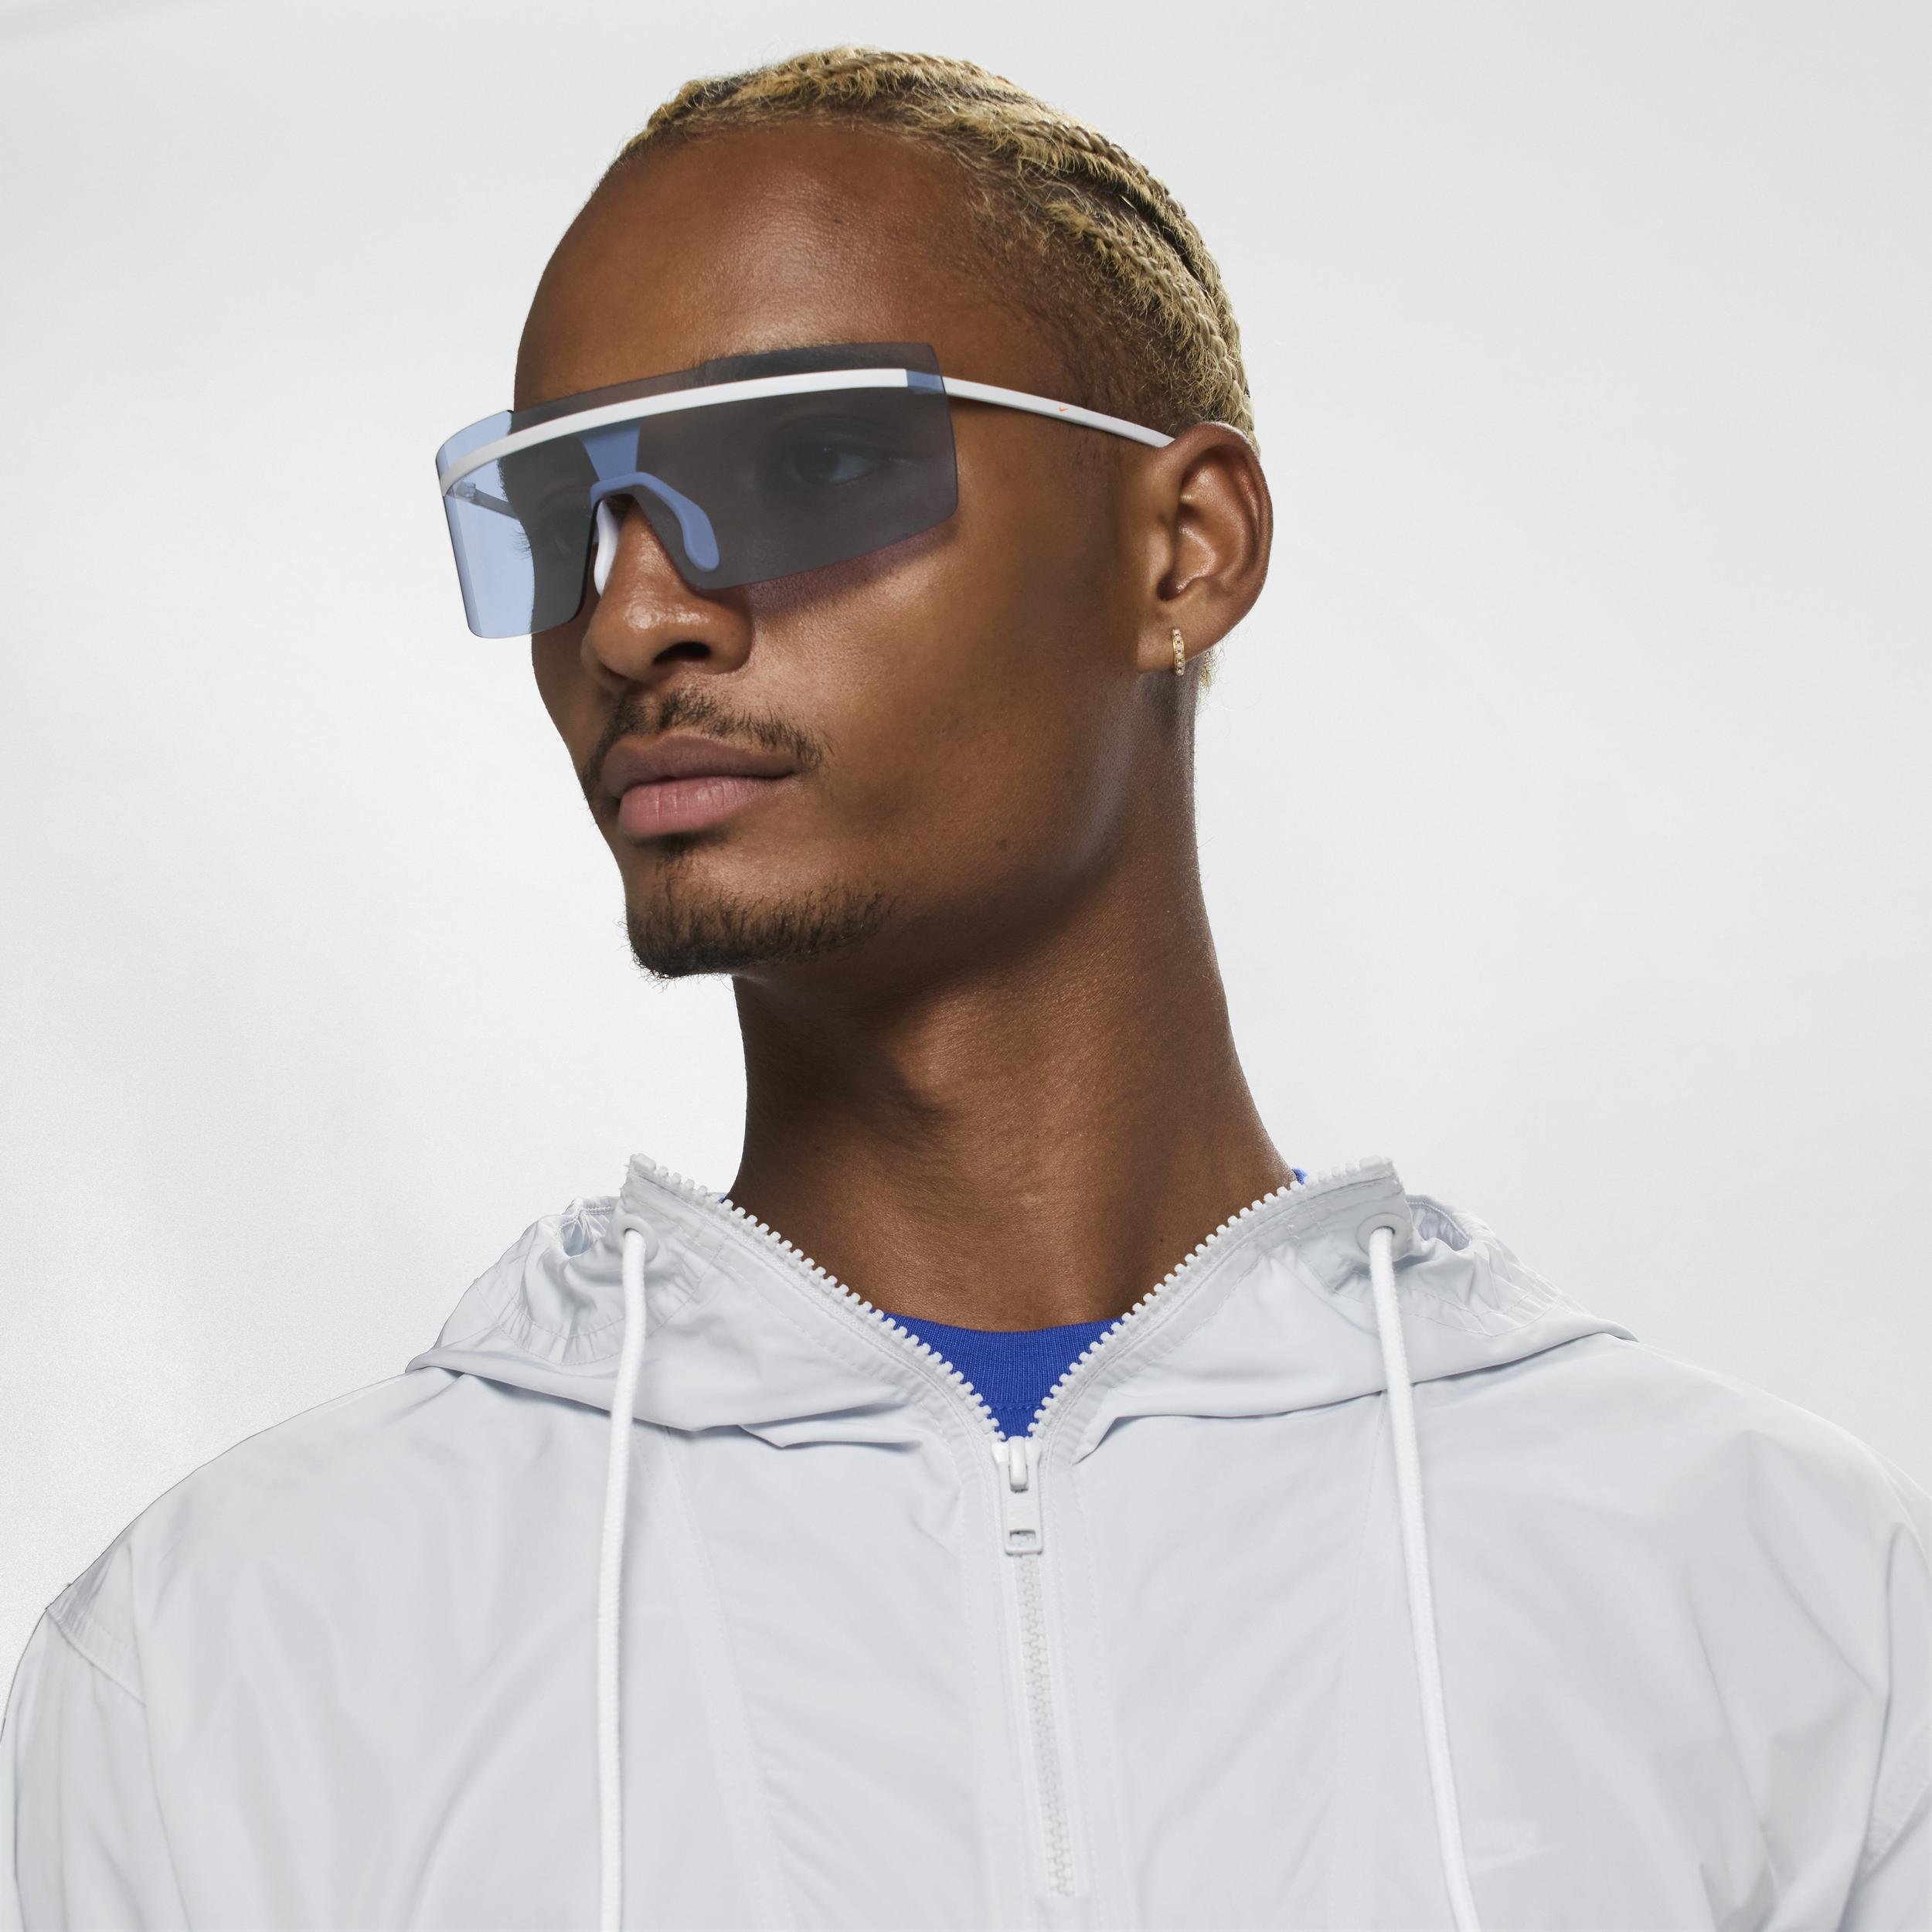 Nike Unisex Echo Shield Mirrored Sunglasses by NIKE